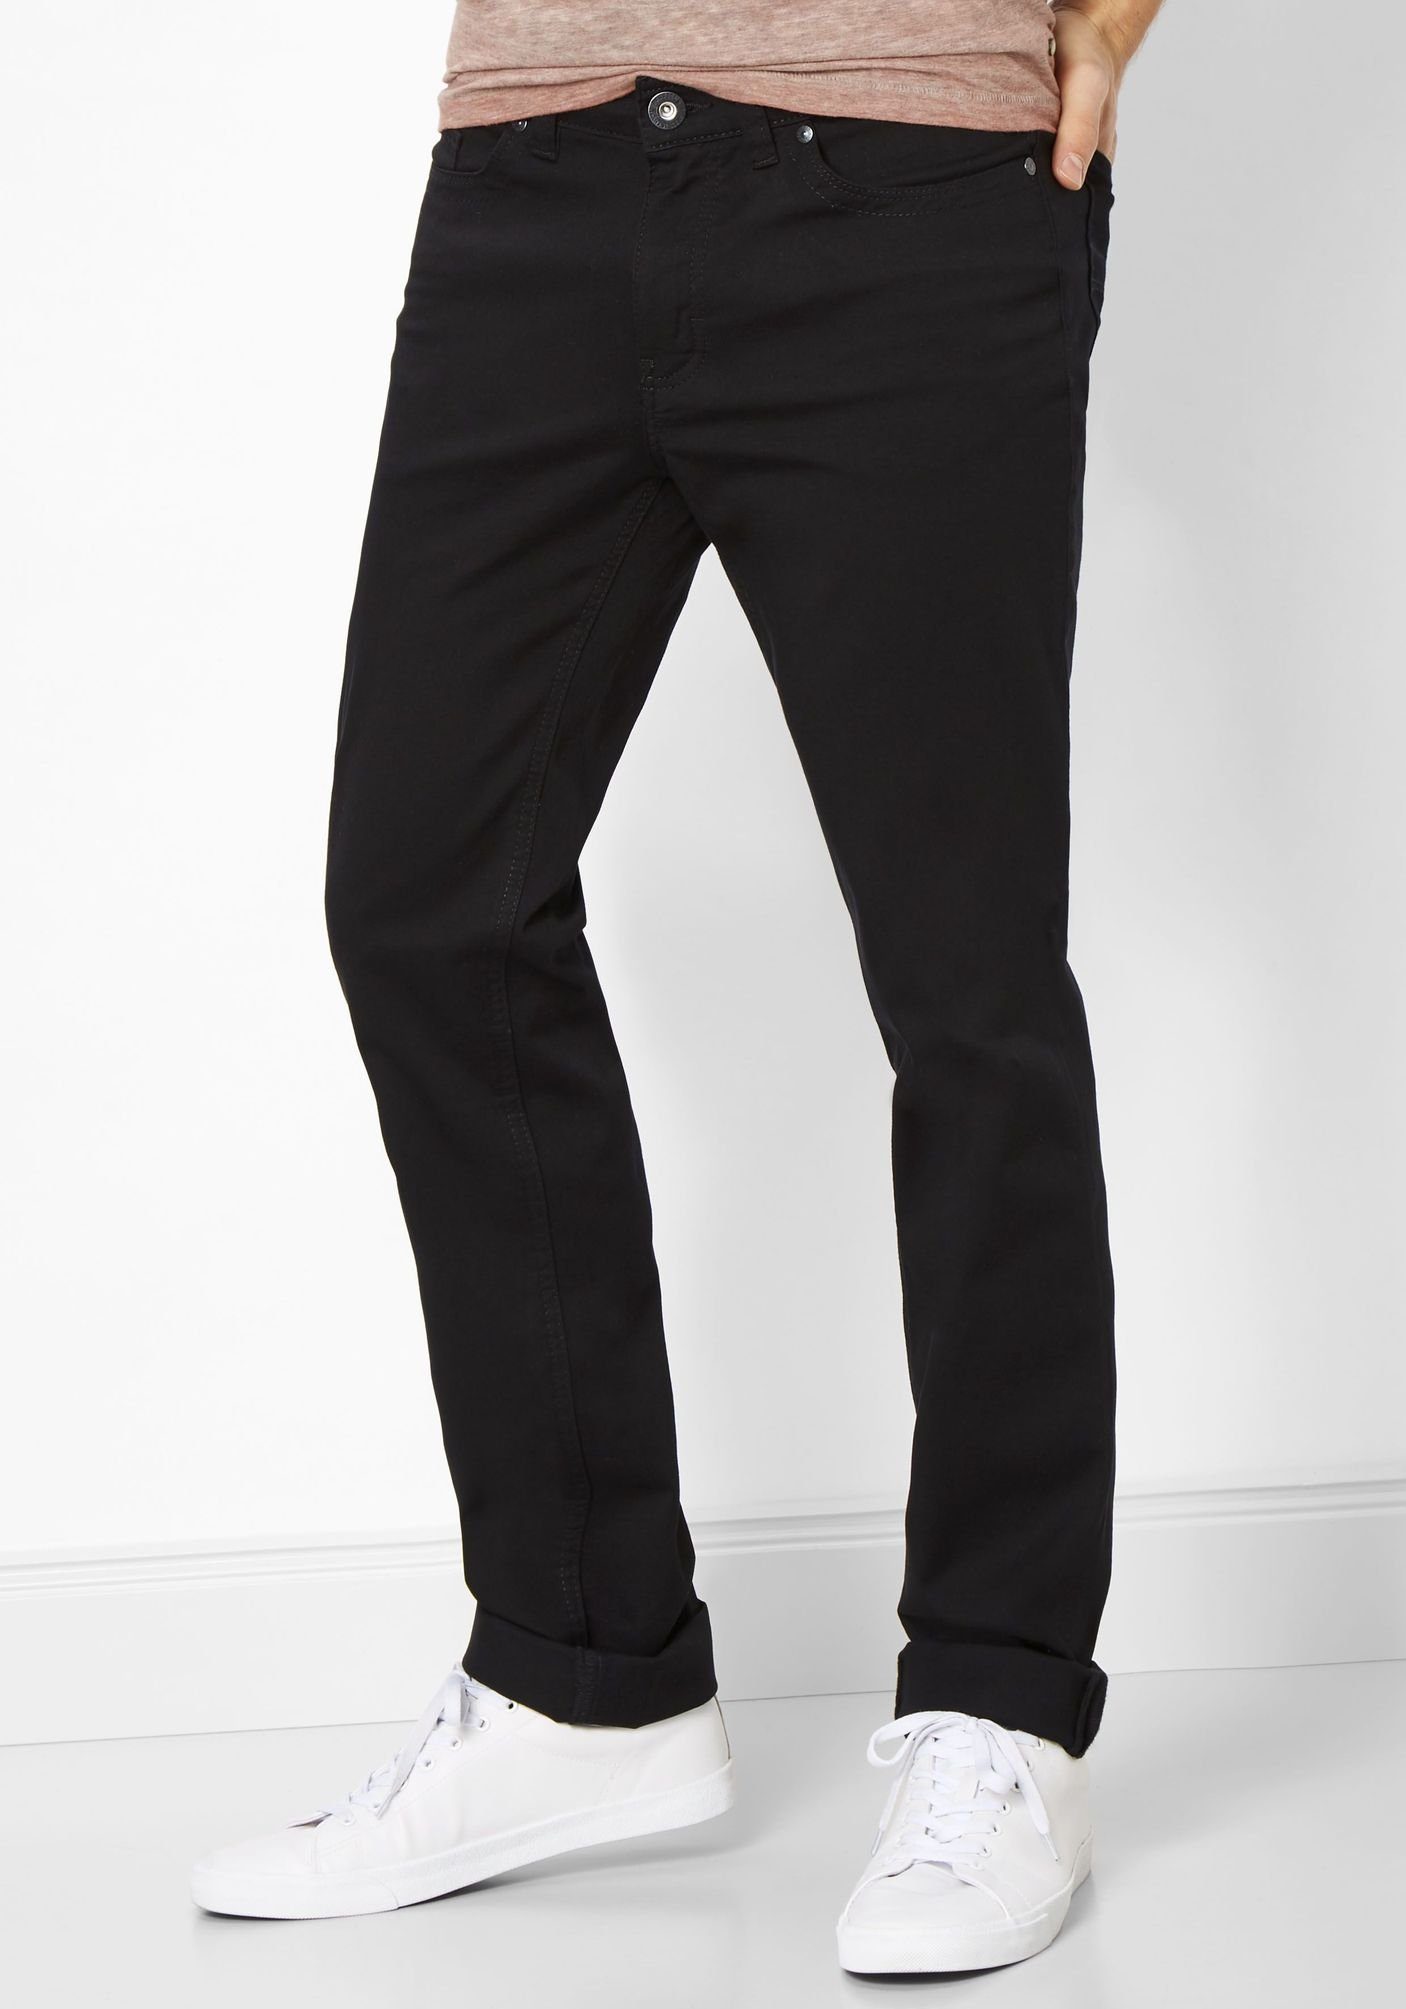 Paddock's black 5-Pocket-Jeans deep Ranger (801201496000) Pipe